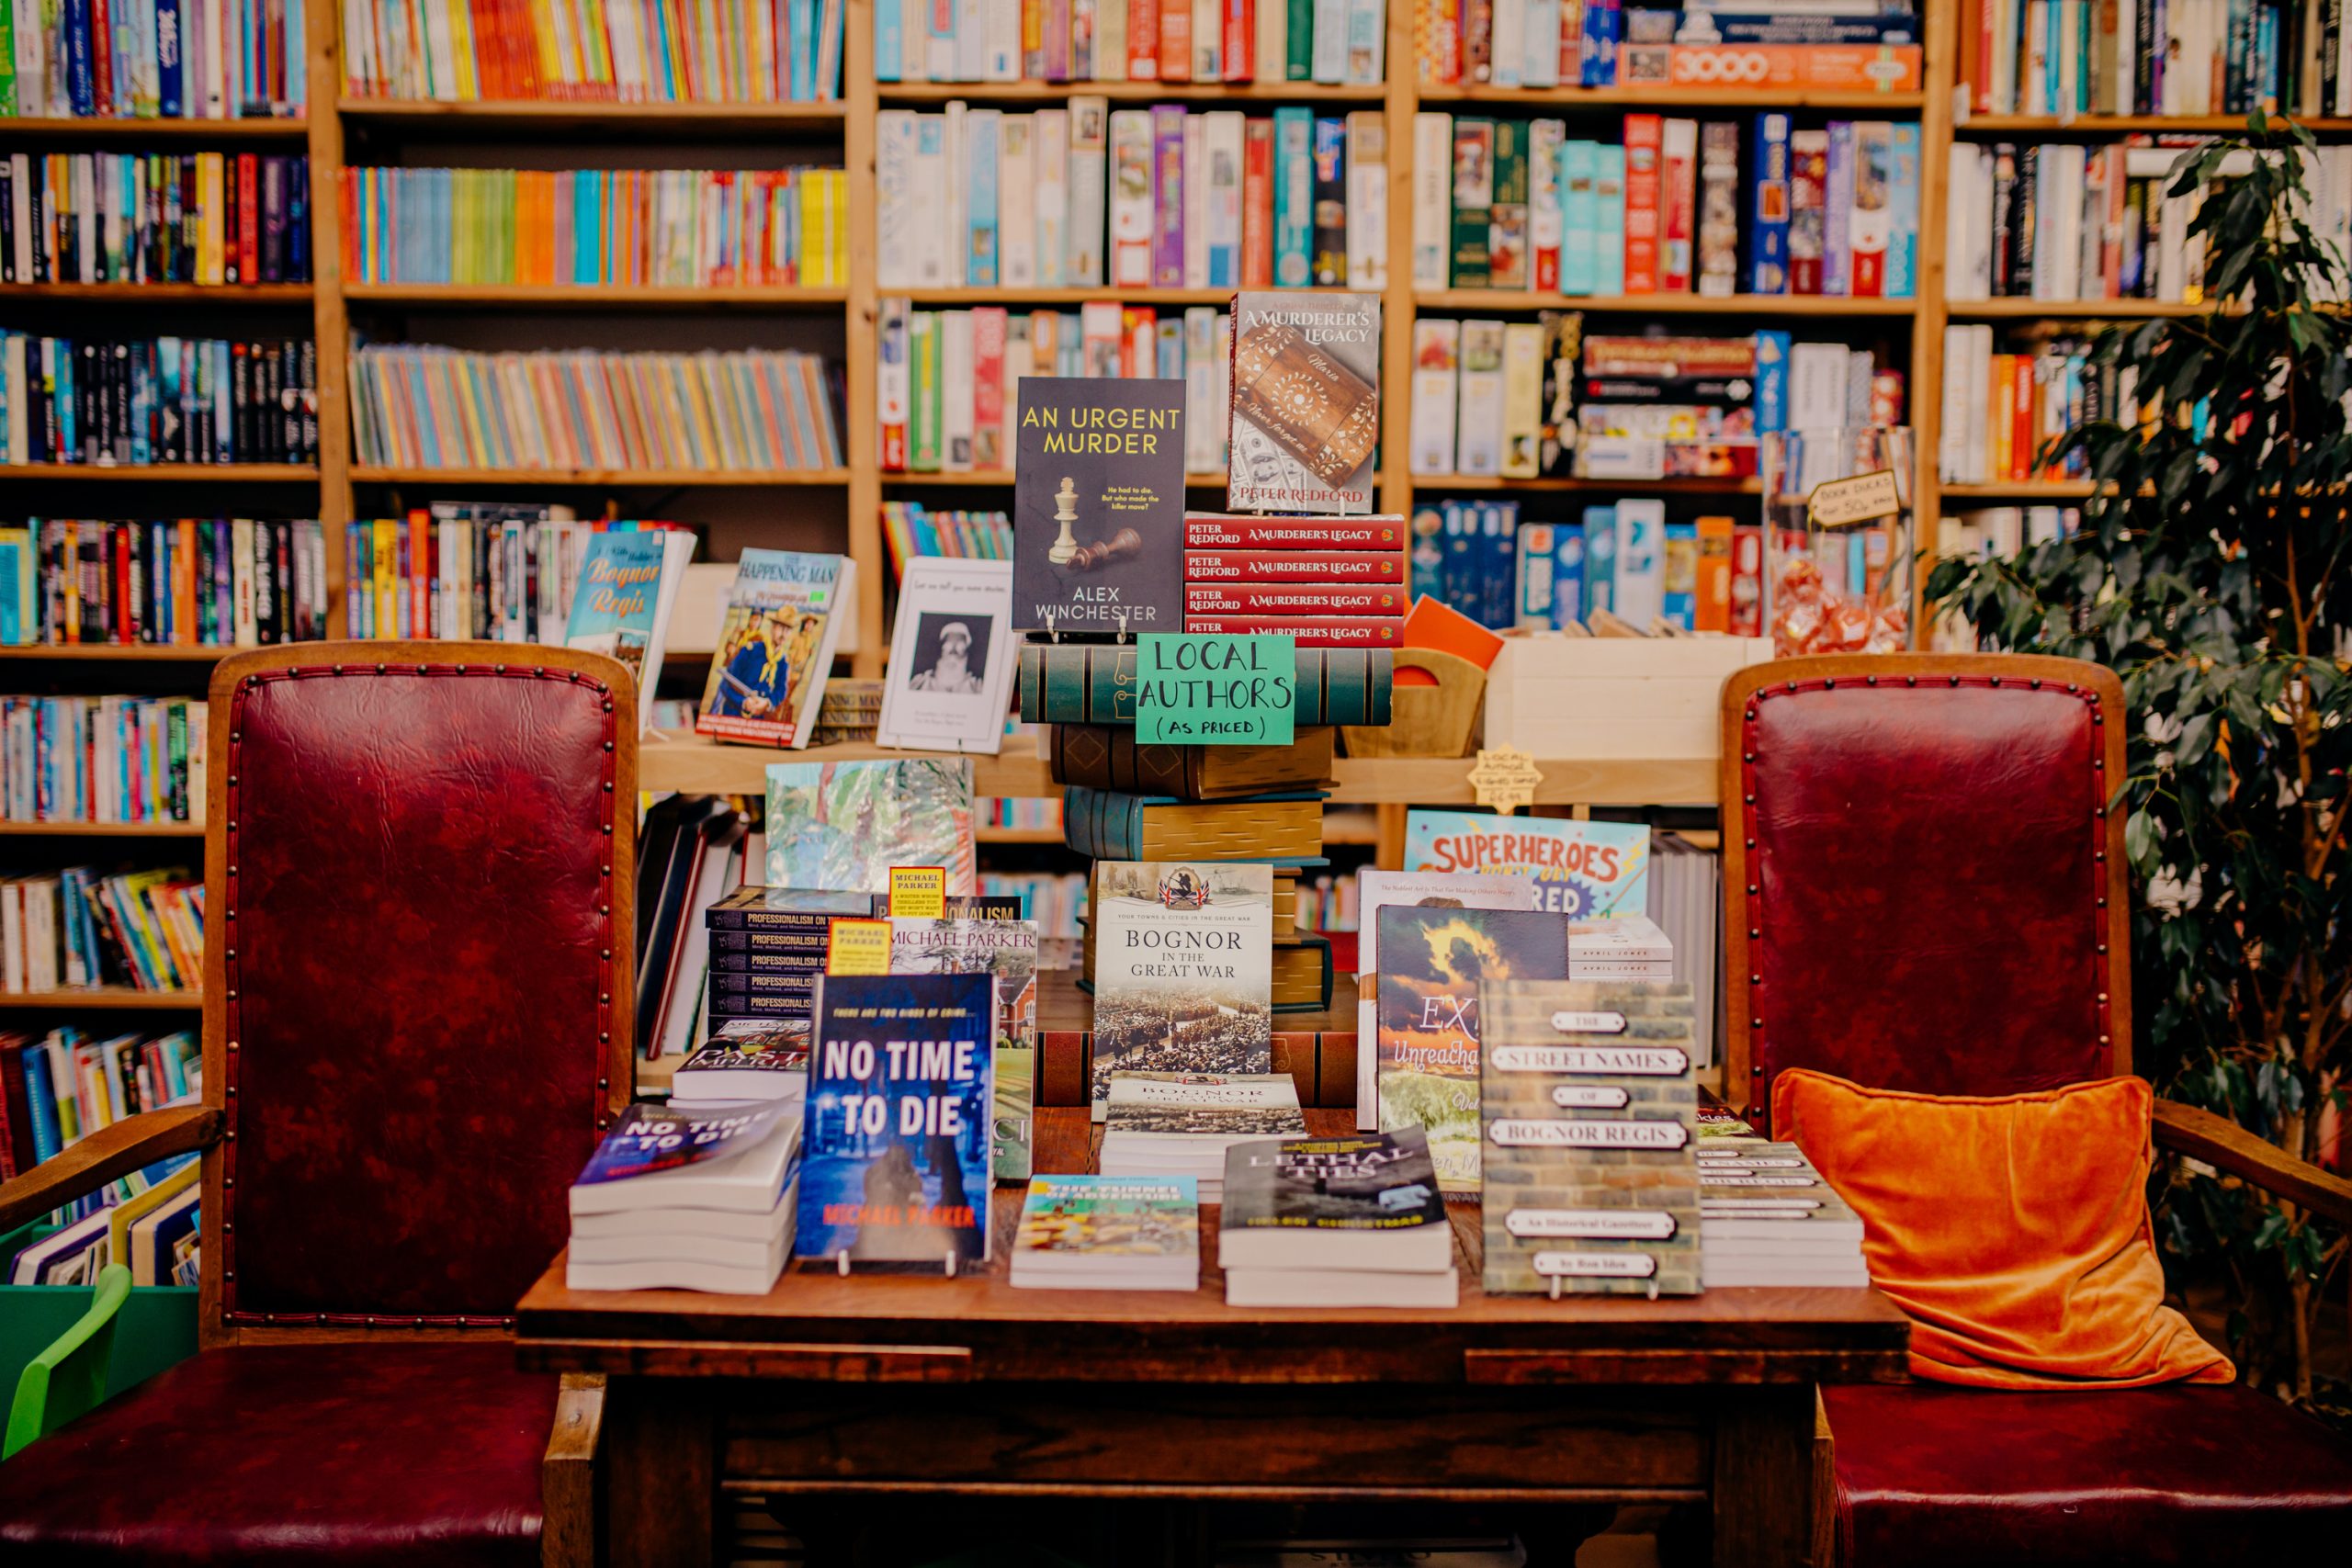 Heygates Bookshop Bognor Regis by Peter Flude